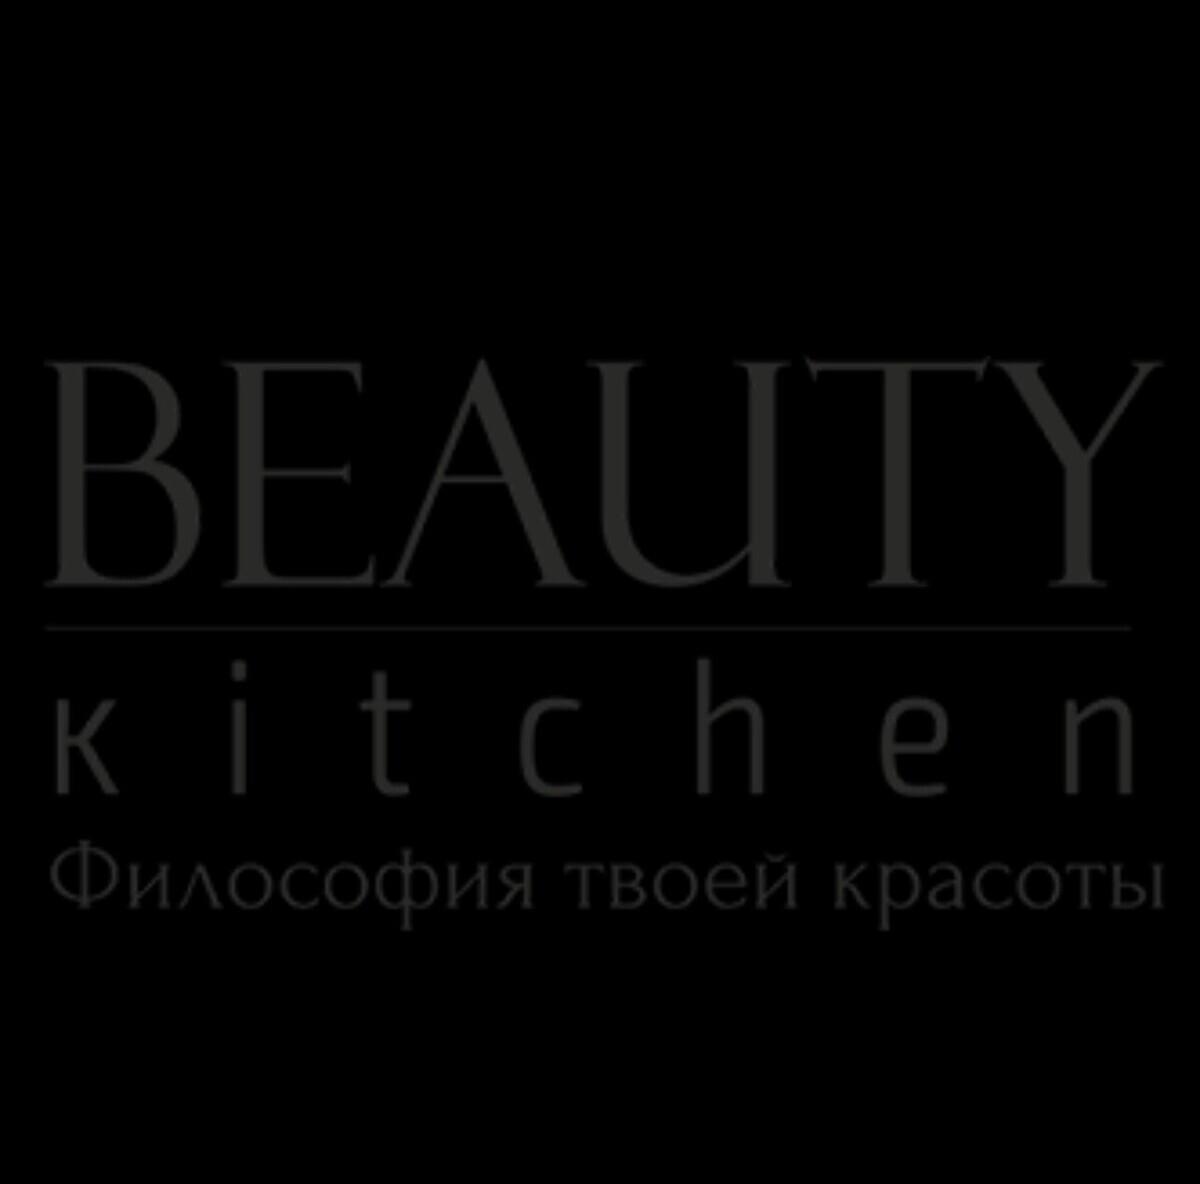 Beauty Kitchen - Томск - Витрина с улицы